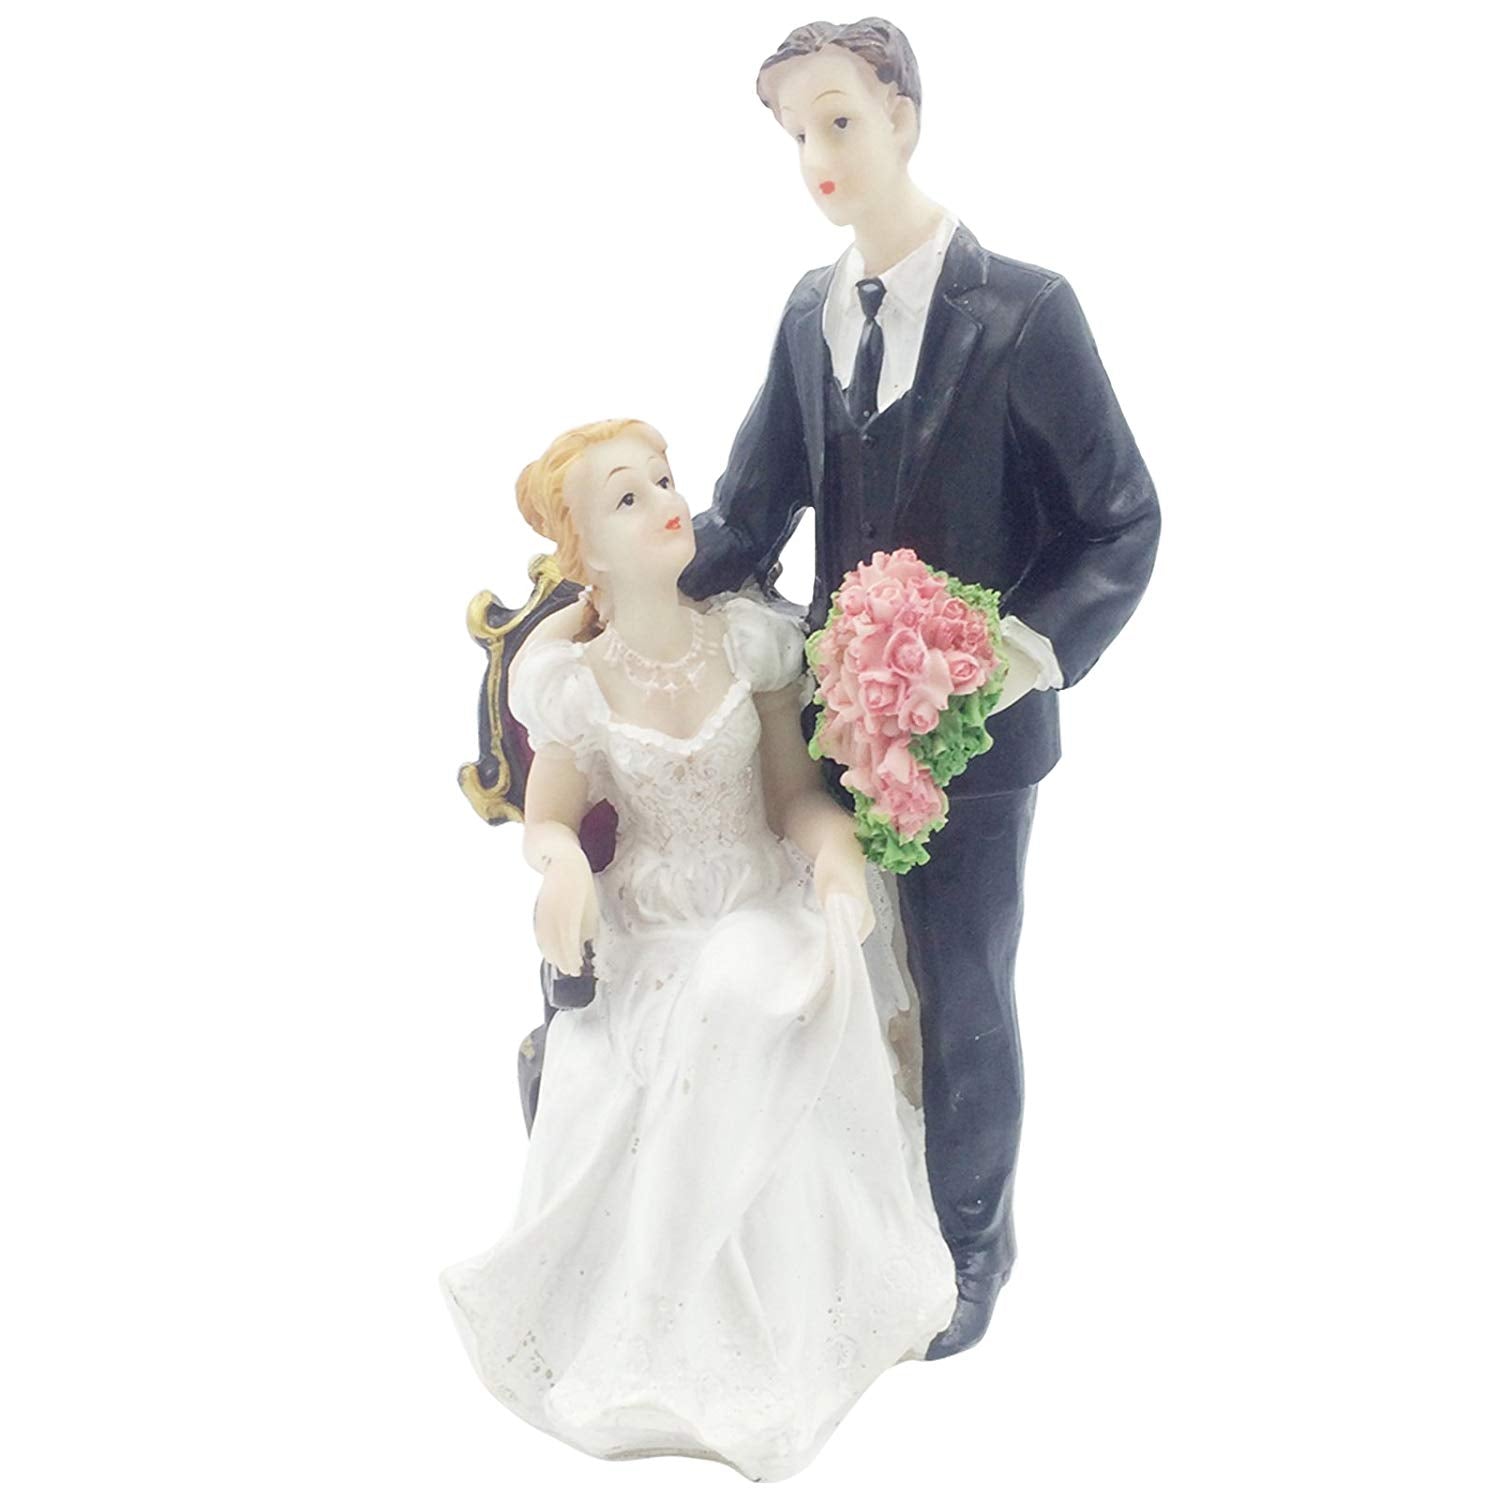 Sweet Memento Bride and Groom Wedding Cake Toppe 6.3 inch